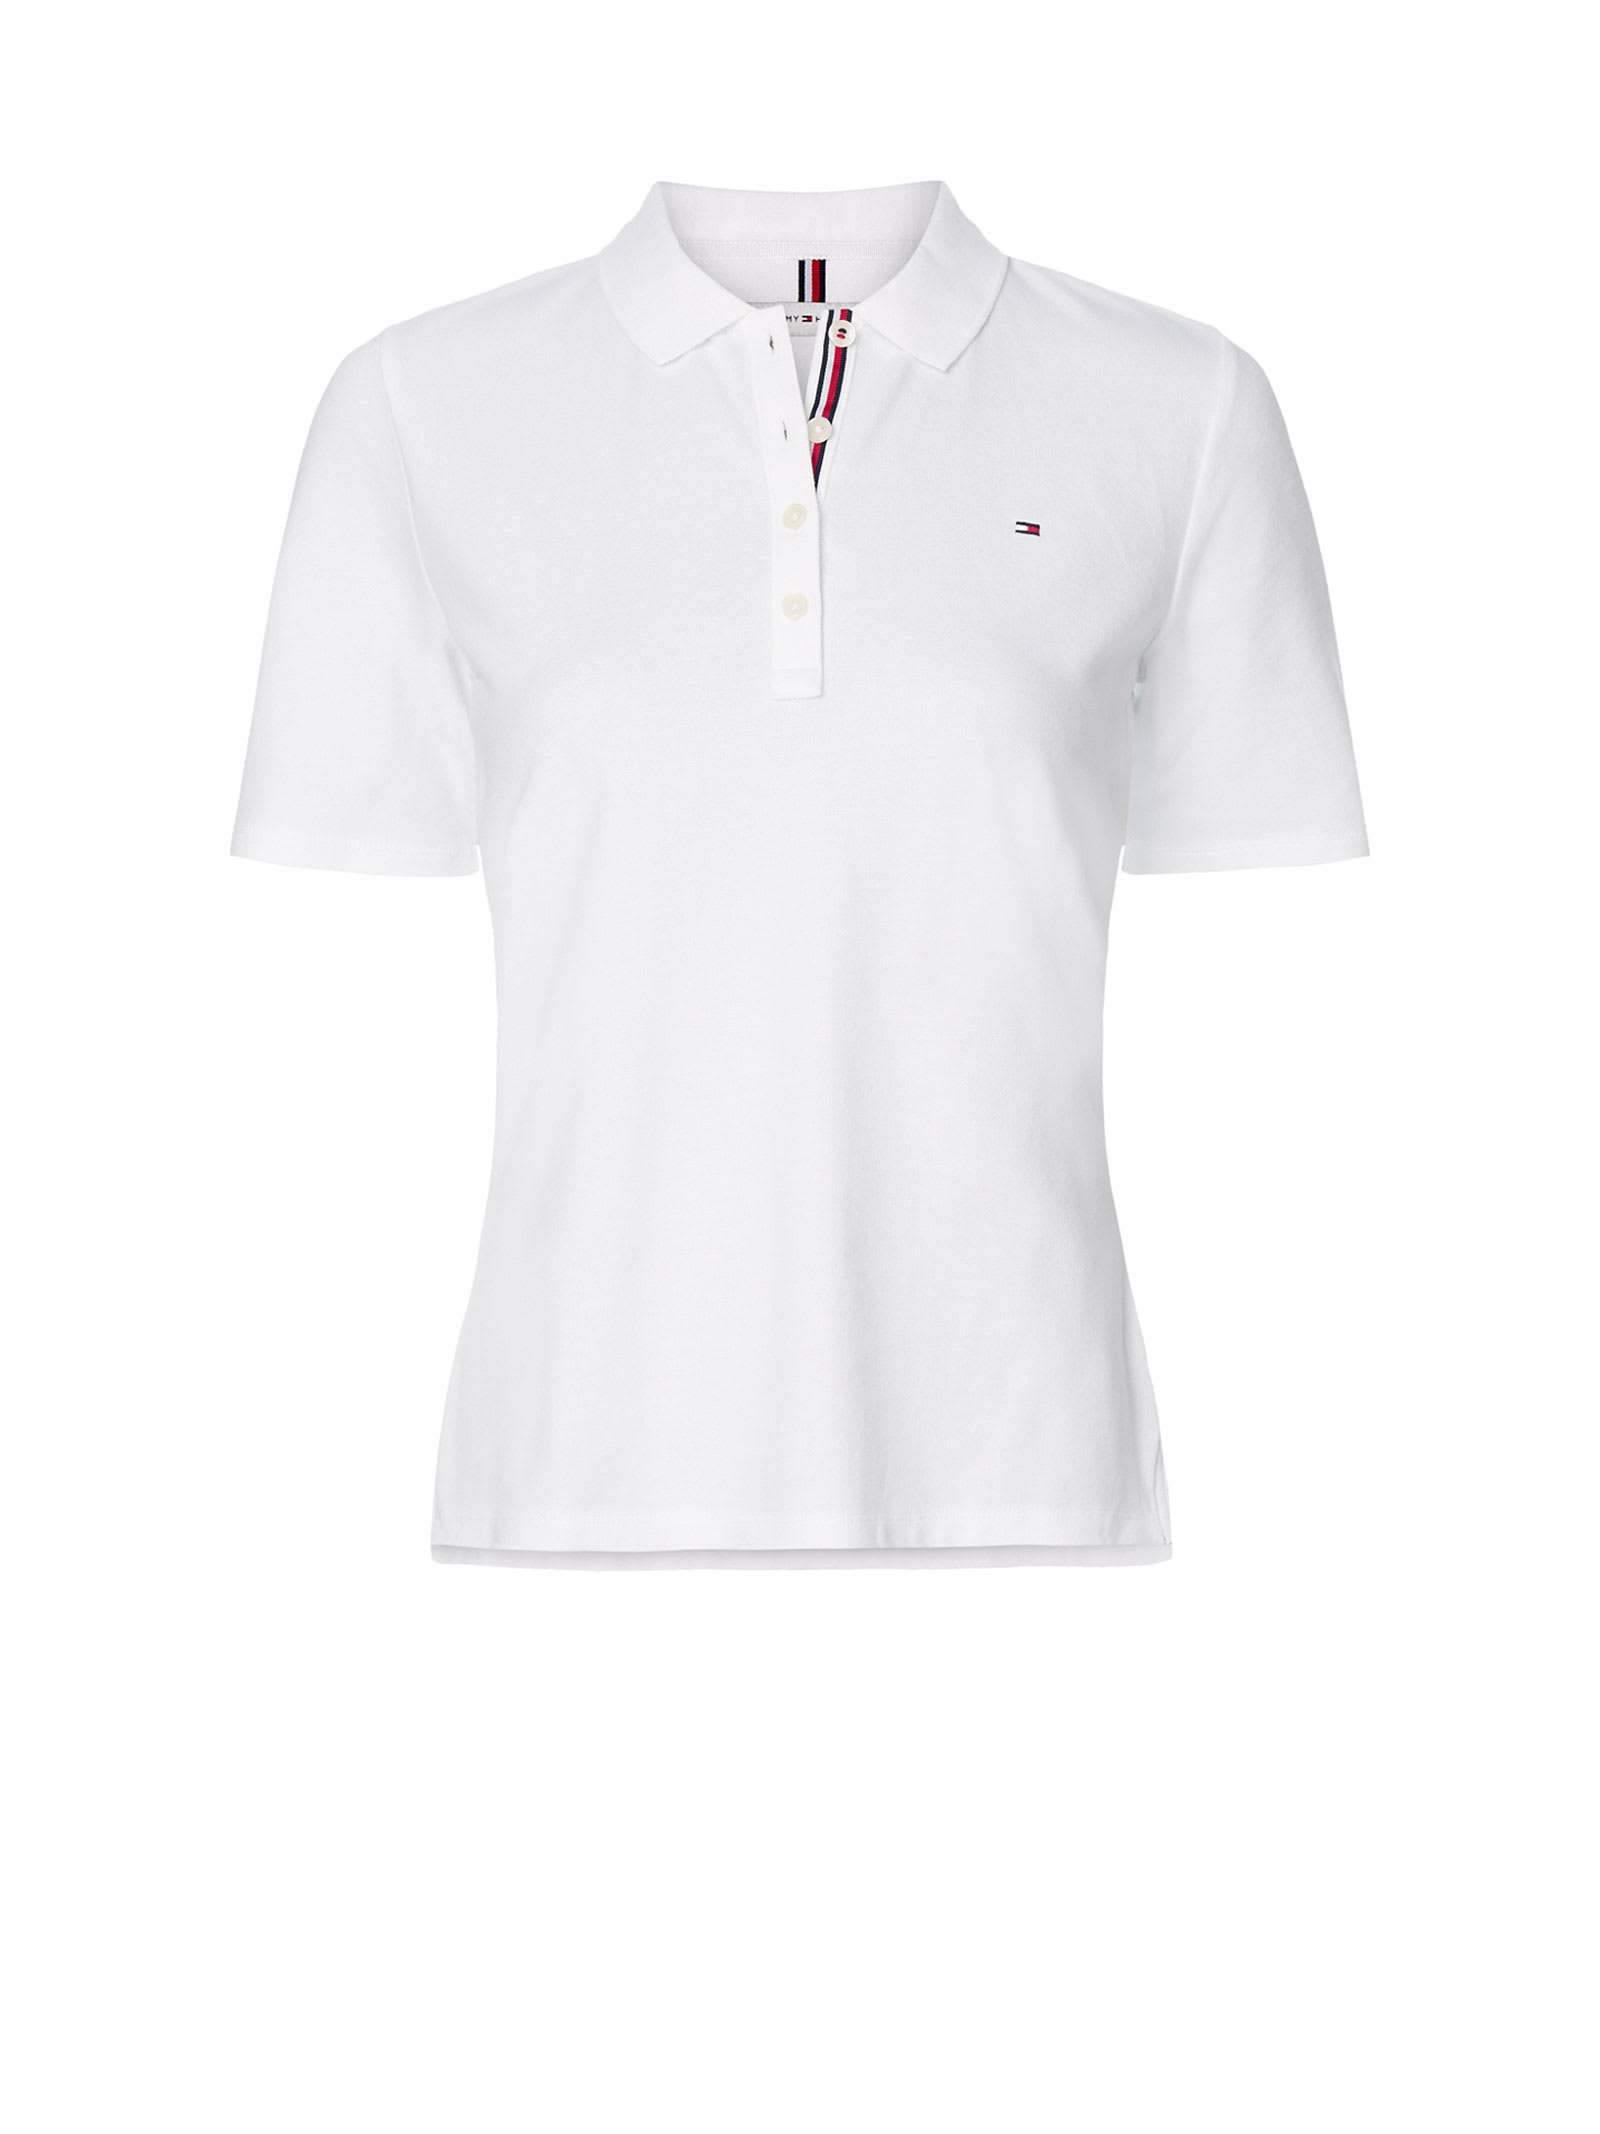 Tommy Hilfiger White Cotton Polo Shirt